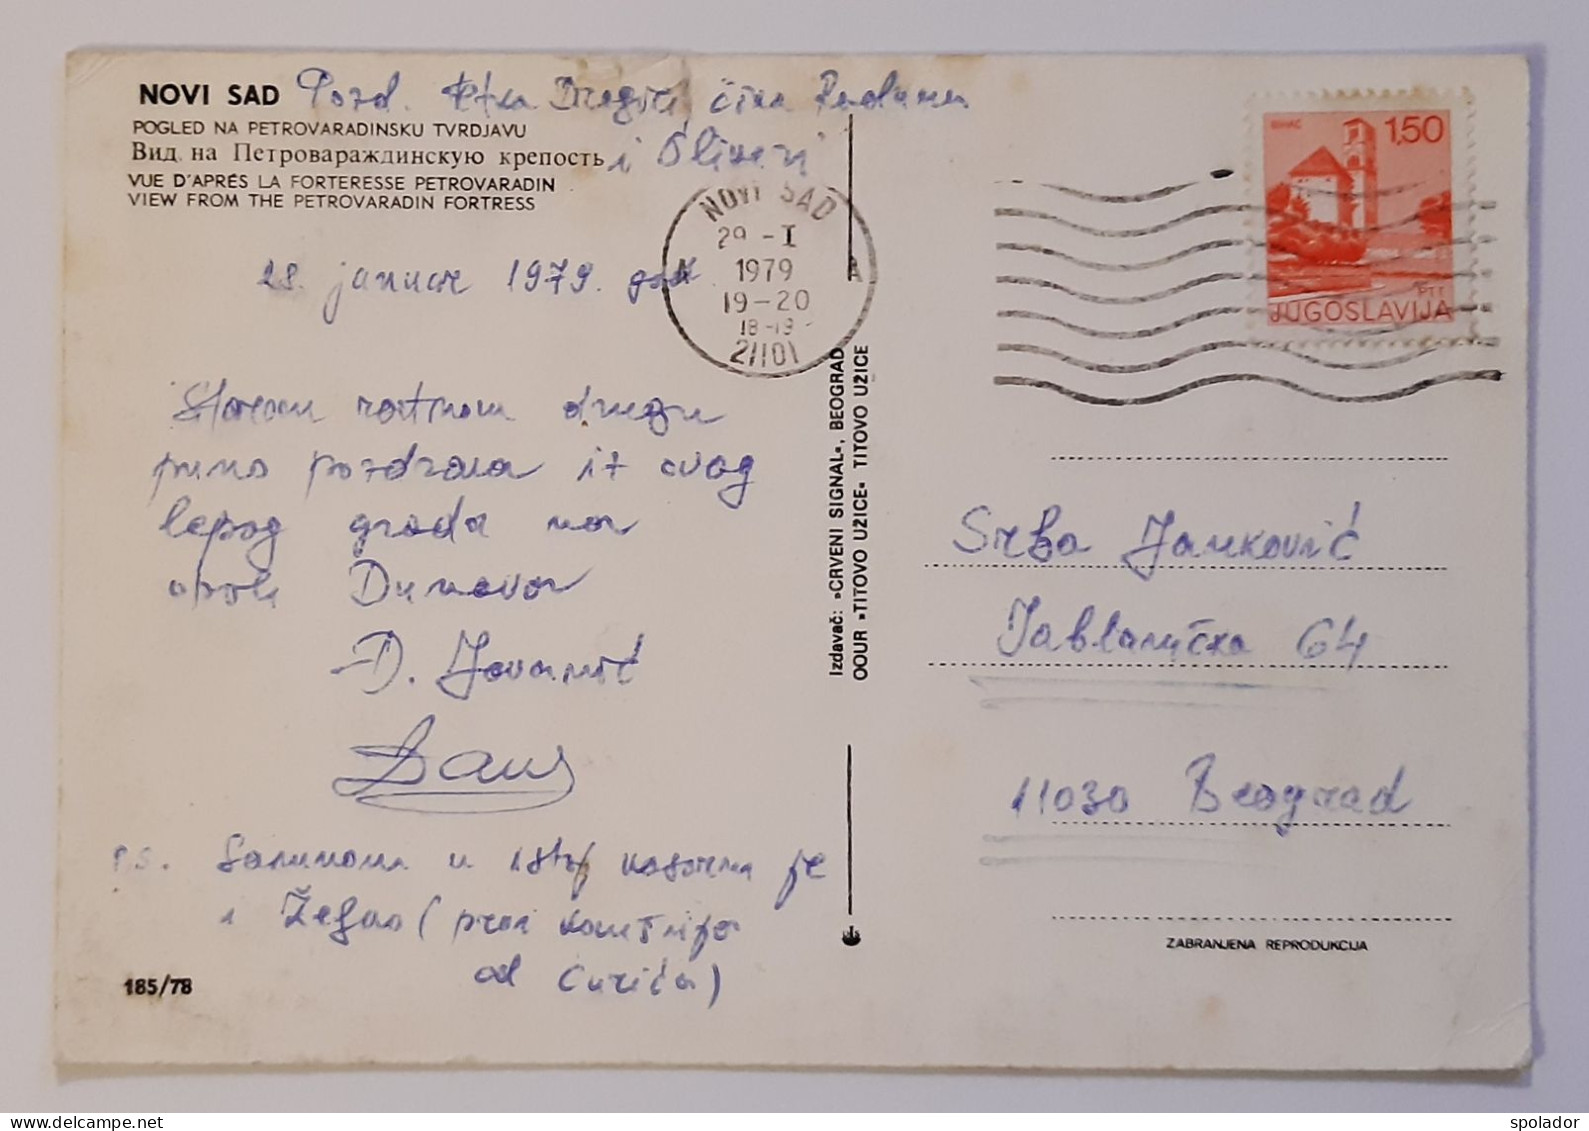 NOVI SAD-Ex-Yugoslavia-Vintage Postcard-Serbia-View From The Petrovaradin Fortress-1979-used With Stamp - Jugoslawien